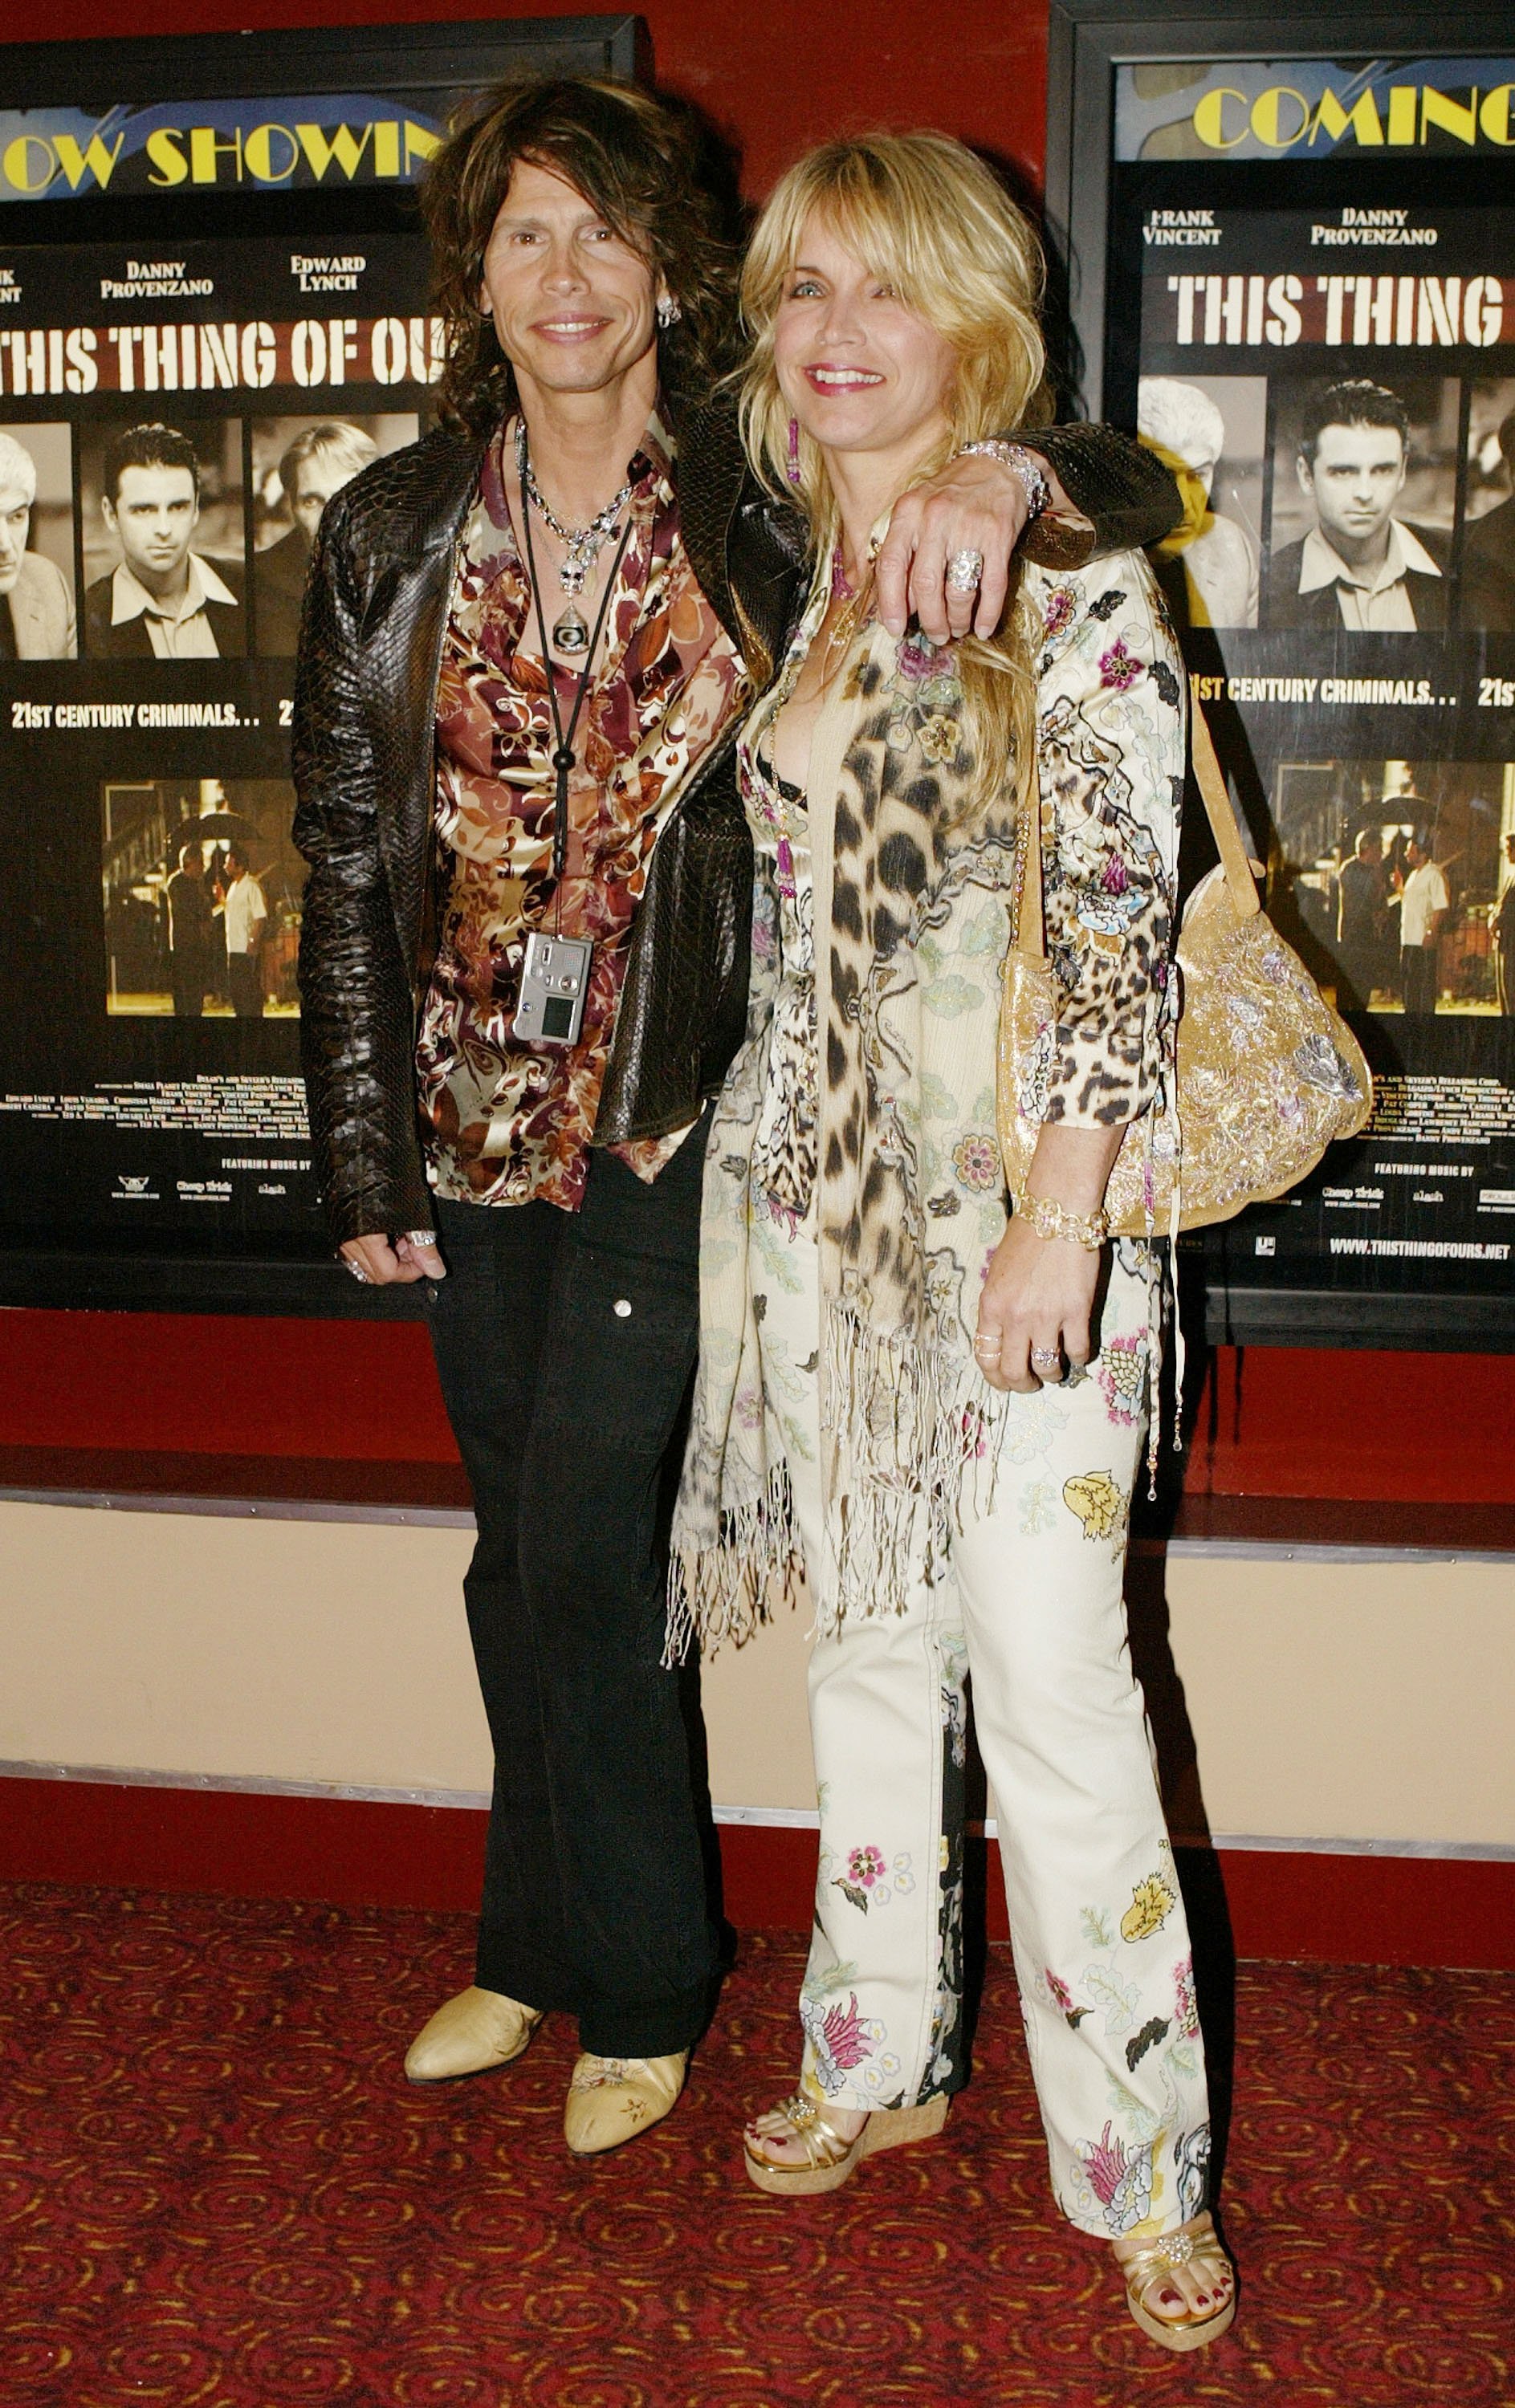 Meet Taj Monroe Tallarico - Photos Of Steven Tyler's Son With Ex-Wife  Teresa Barrick